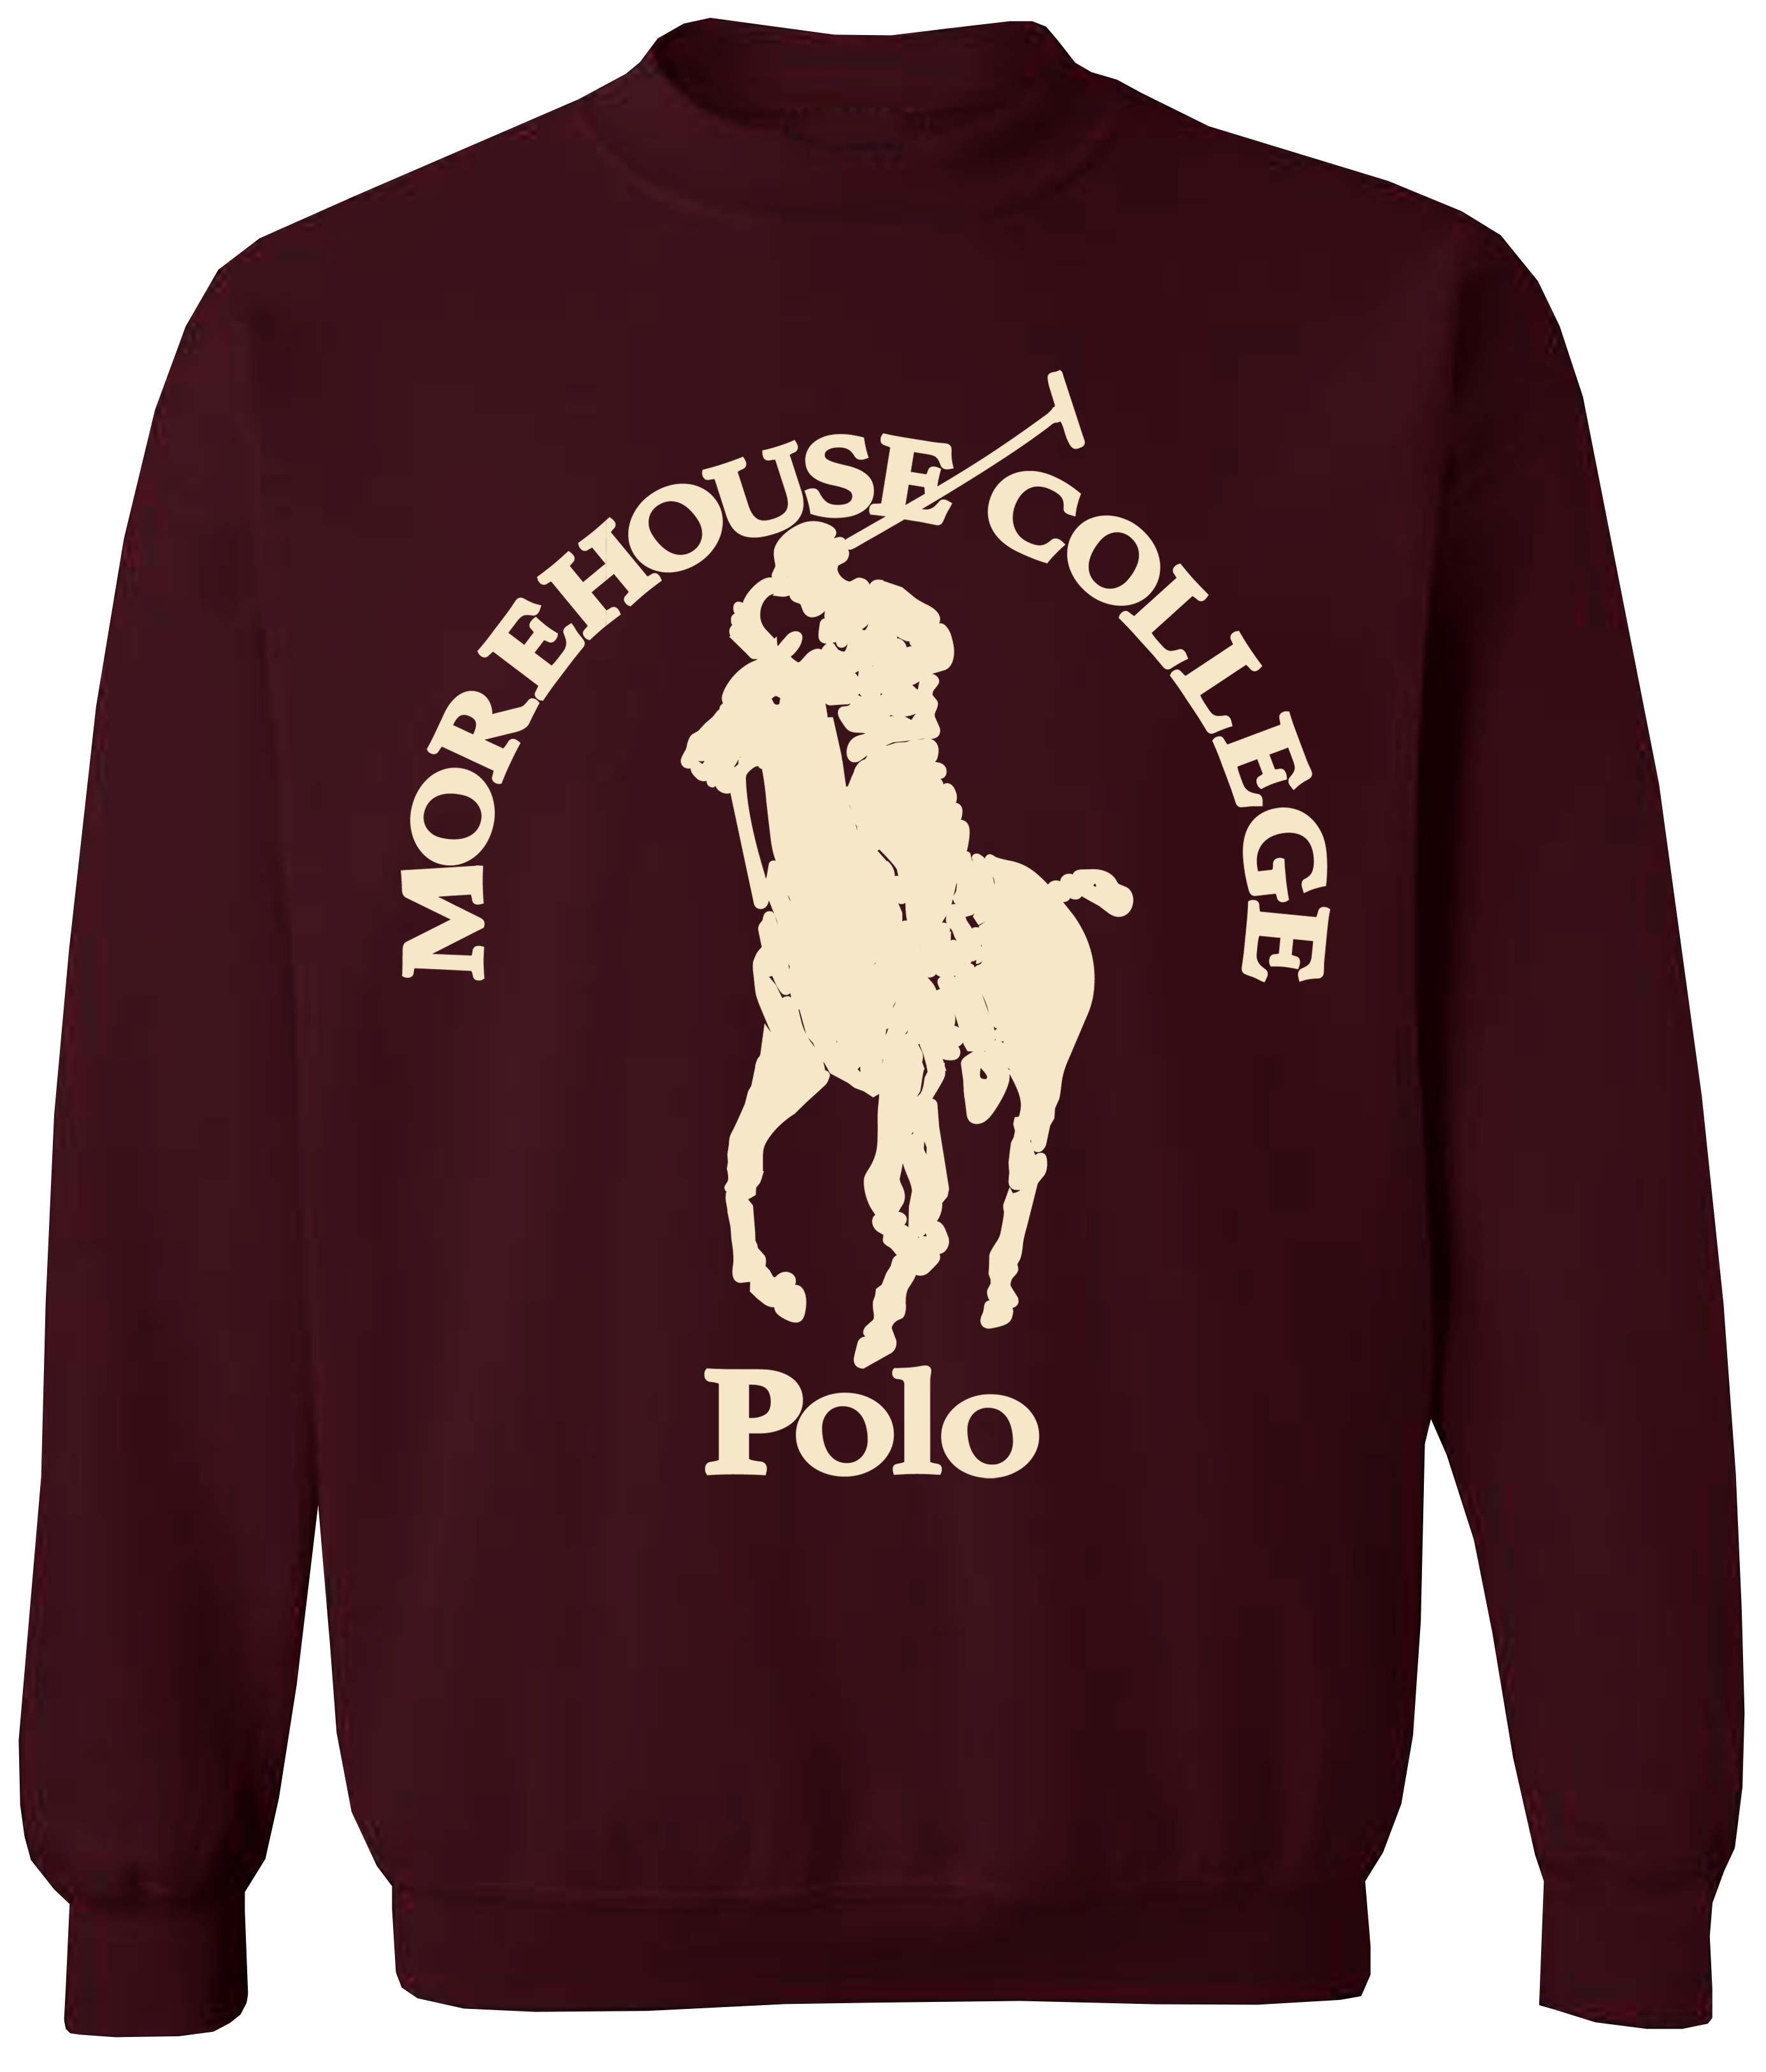 HBCU Polo Crewneck Sweatshirt - Morehouse